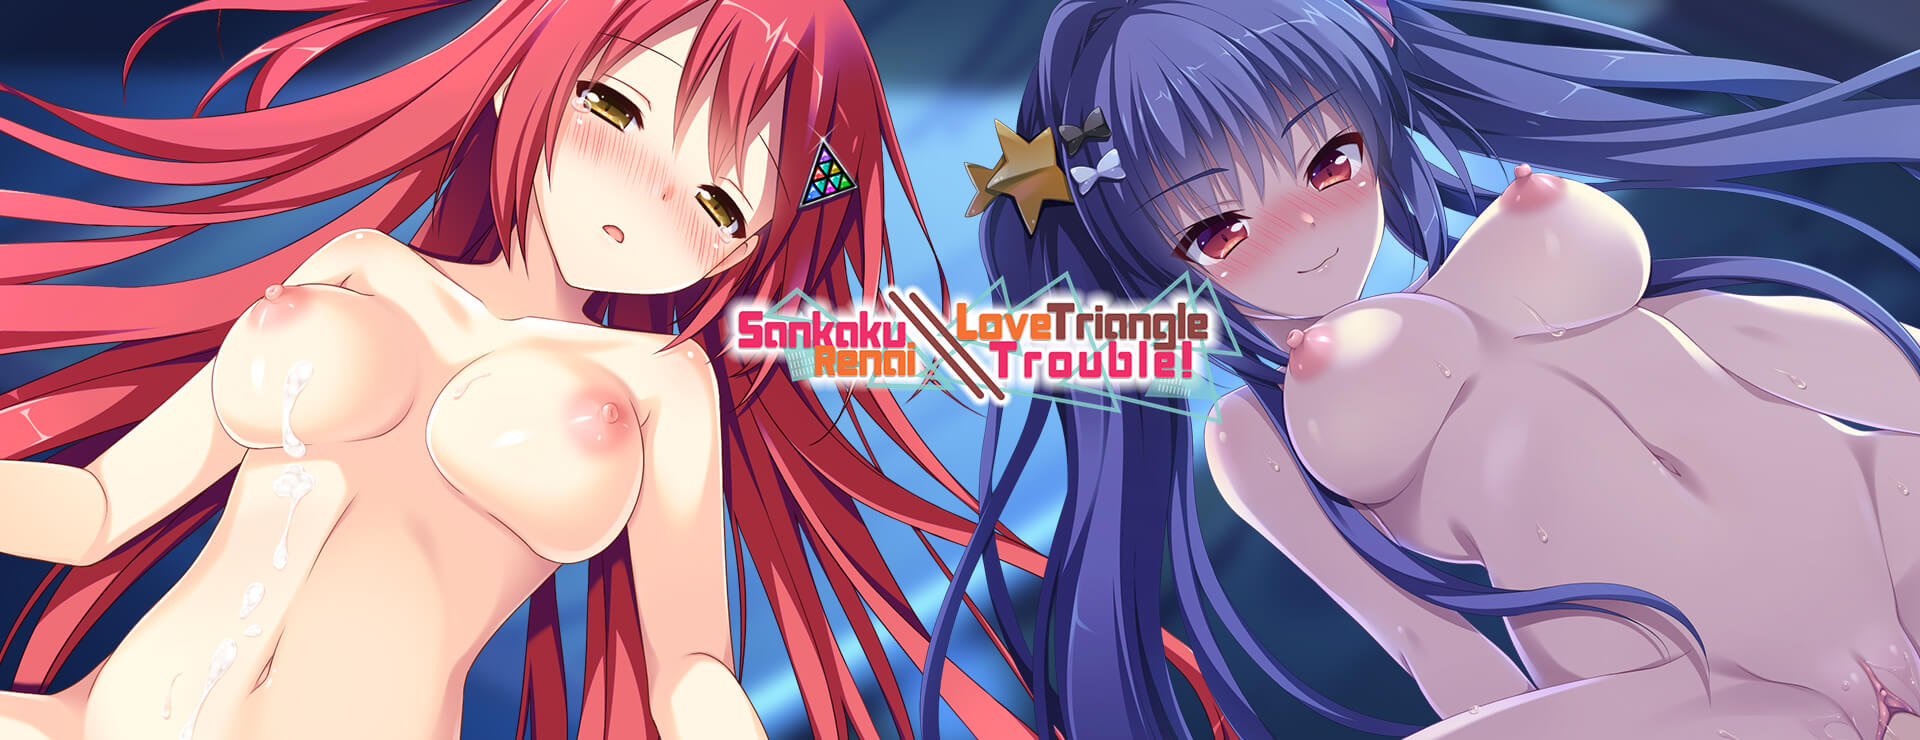 Sankaku Renai - Love Triangle Troubles - Japanisches Adventure Spiel